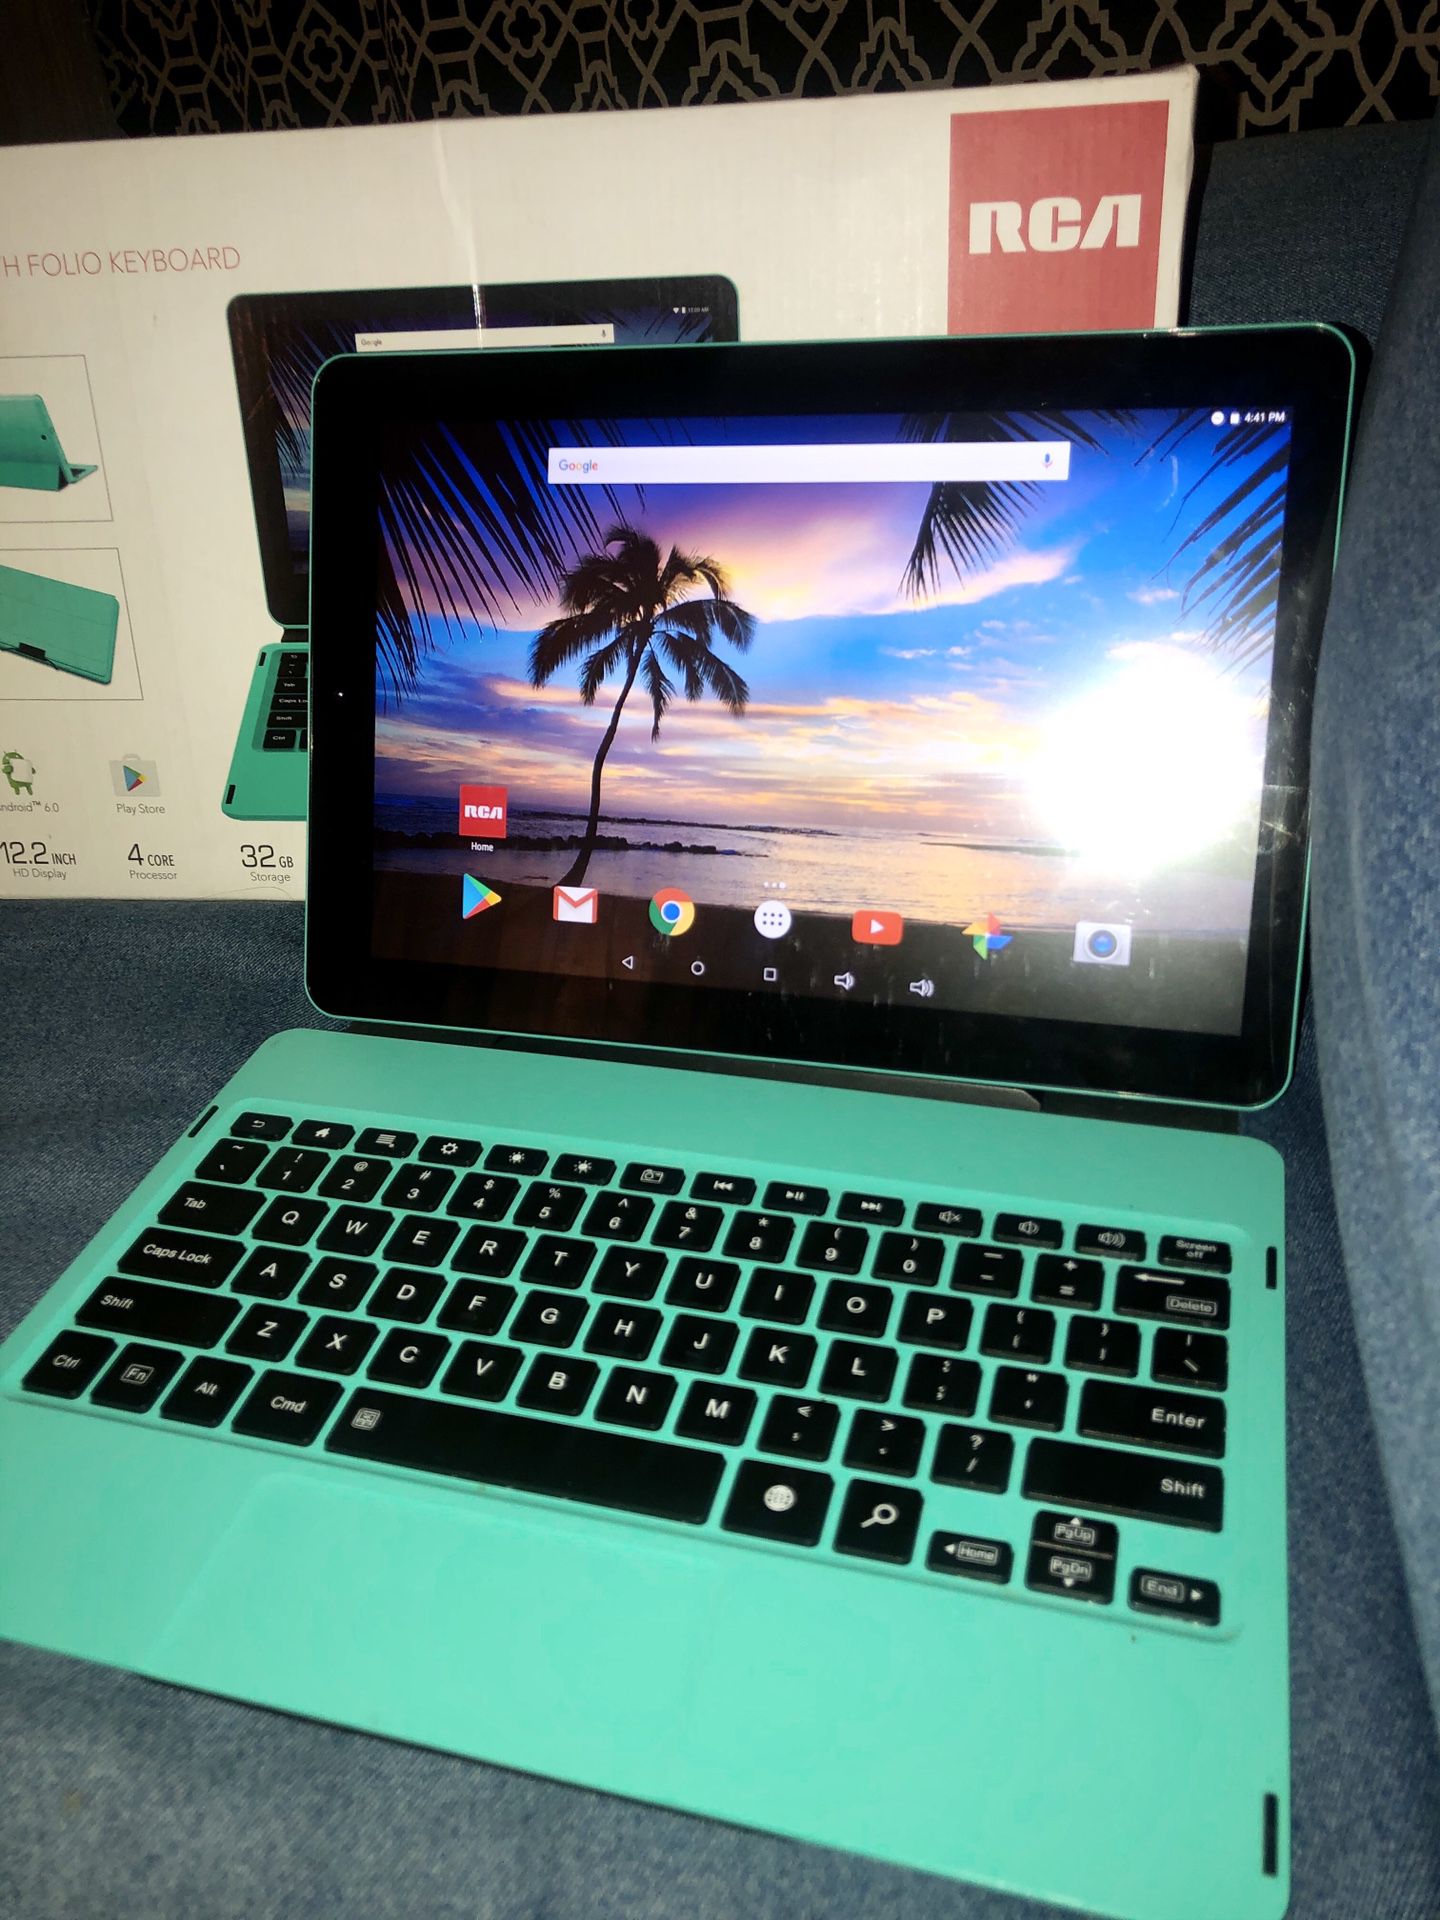 RCA Pro12 Touchscreen Tablet w Folio Keyboard Like New!!